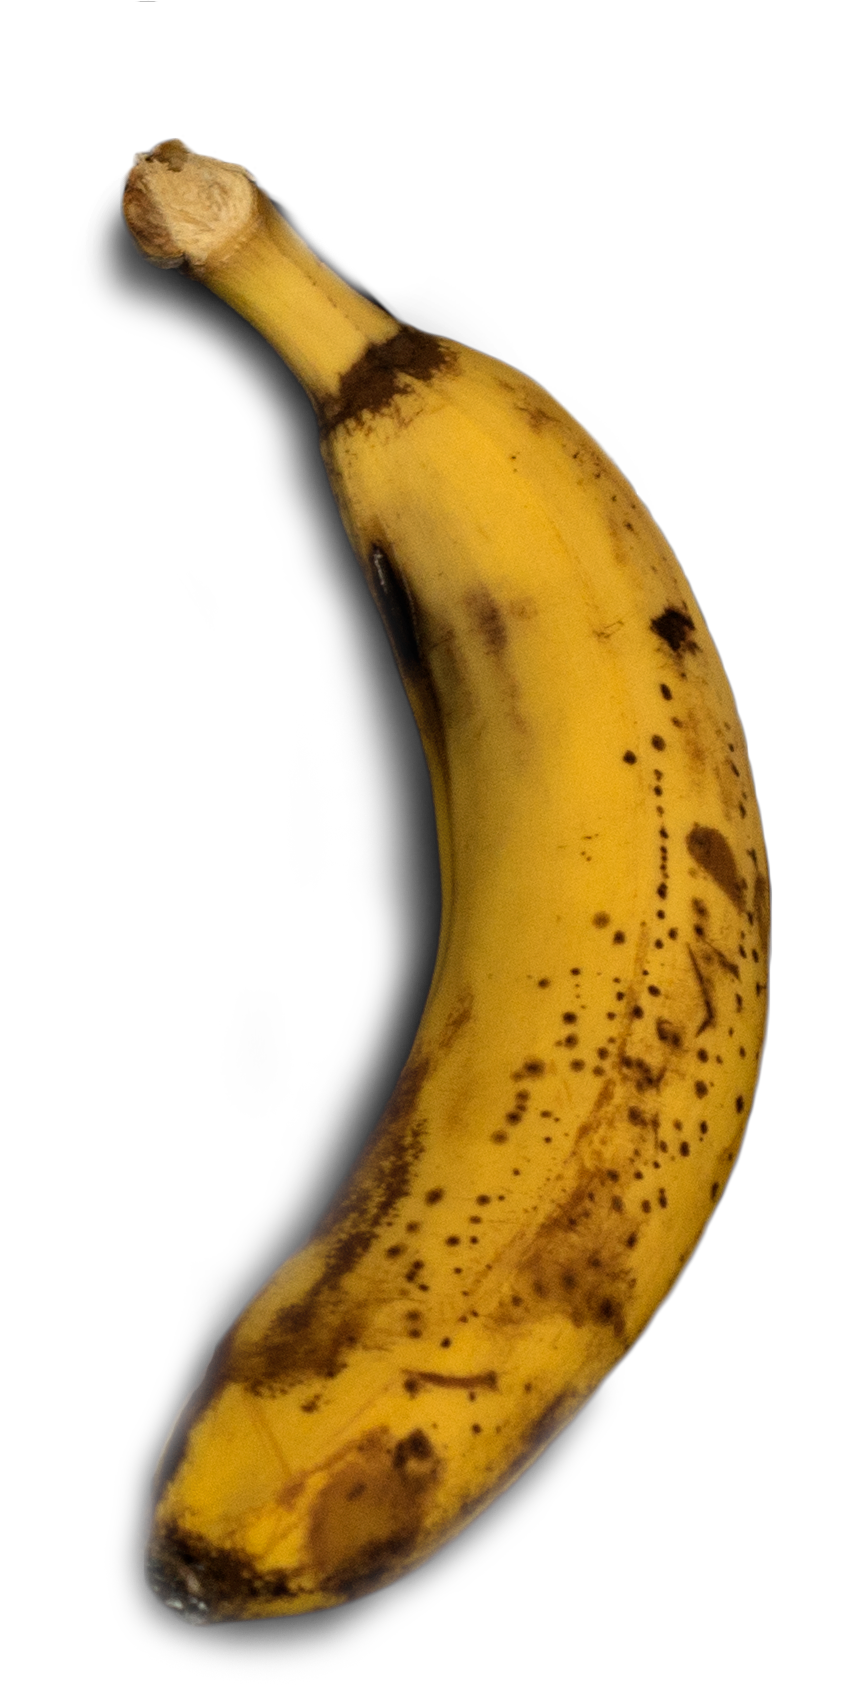 Доклад по теме Банан